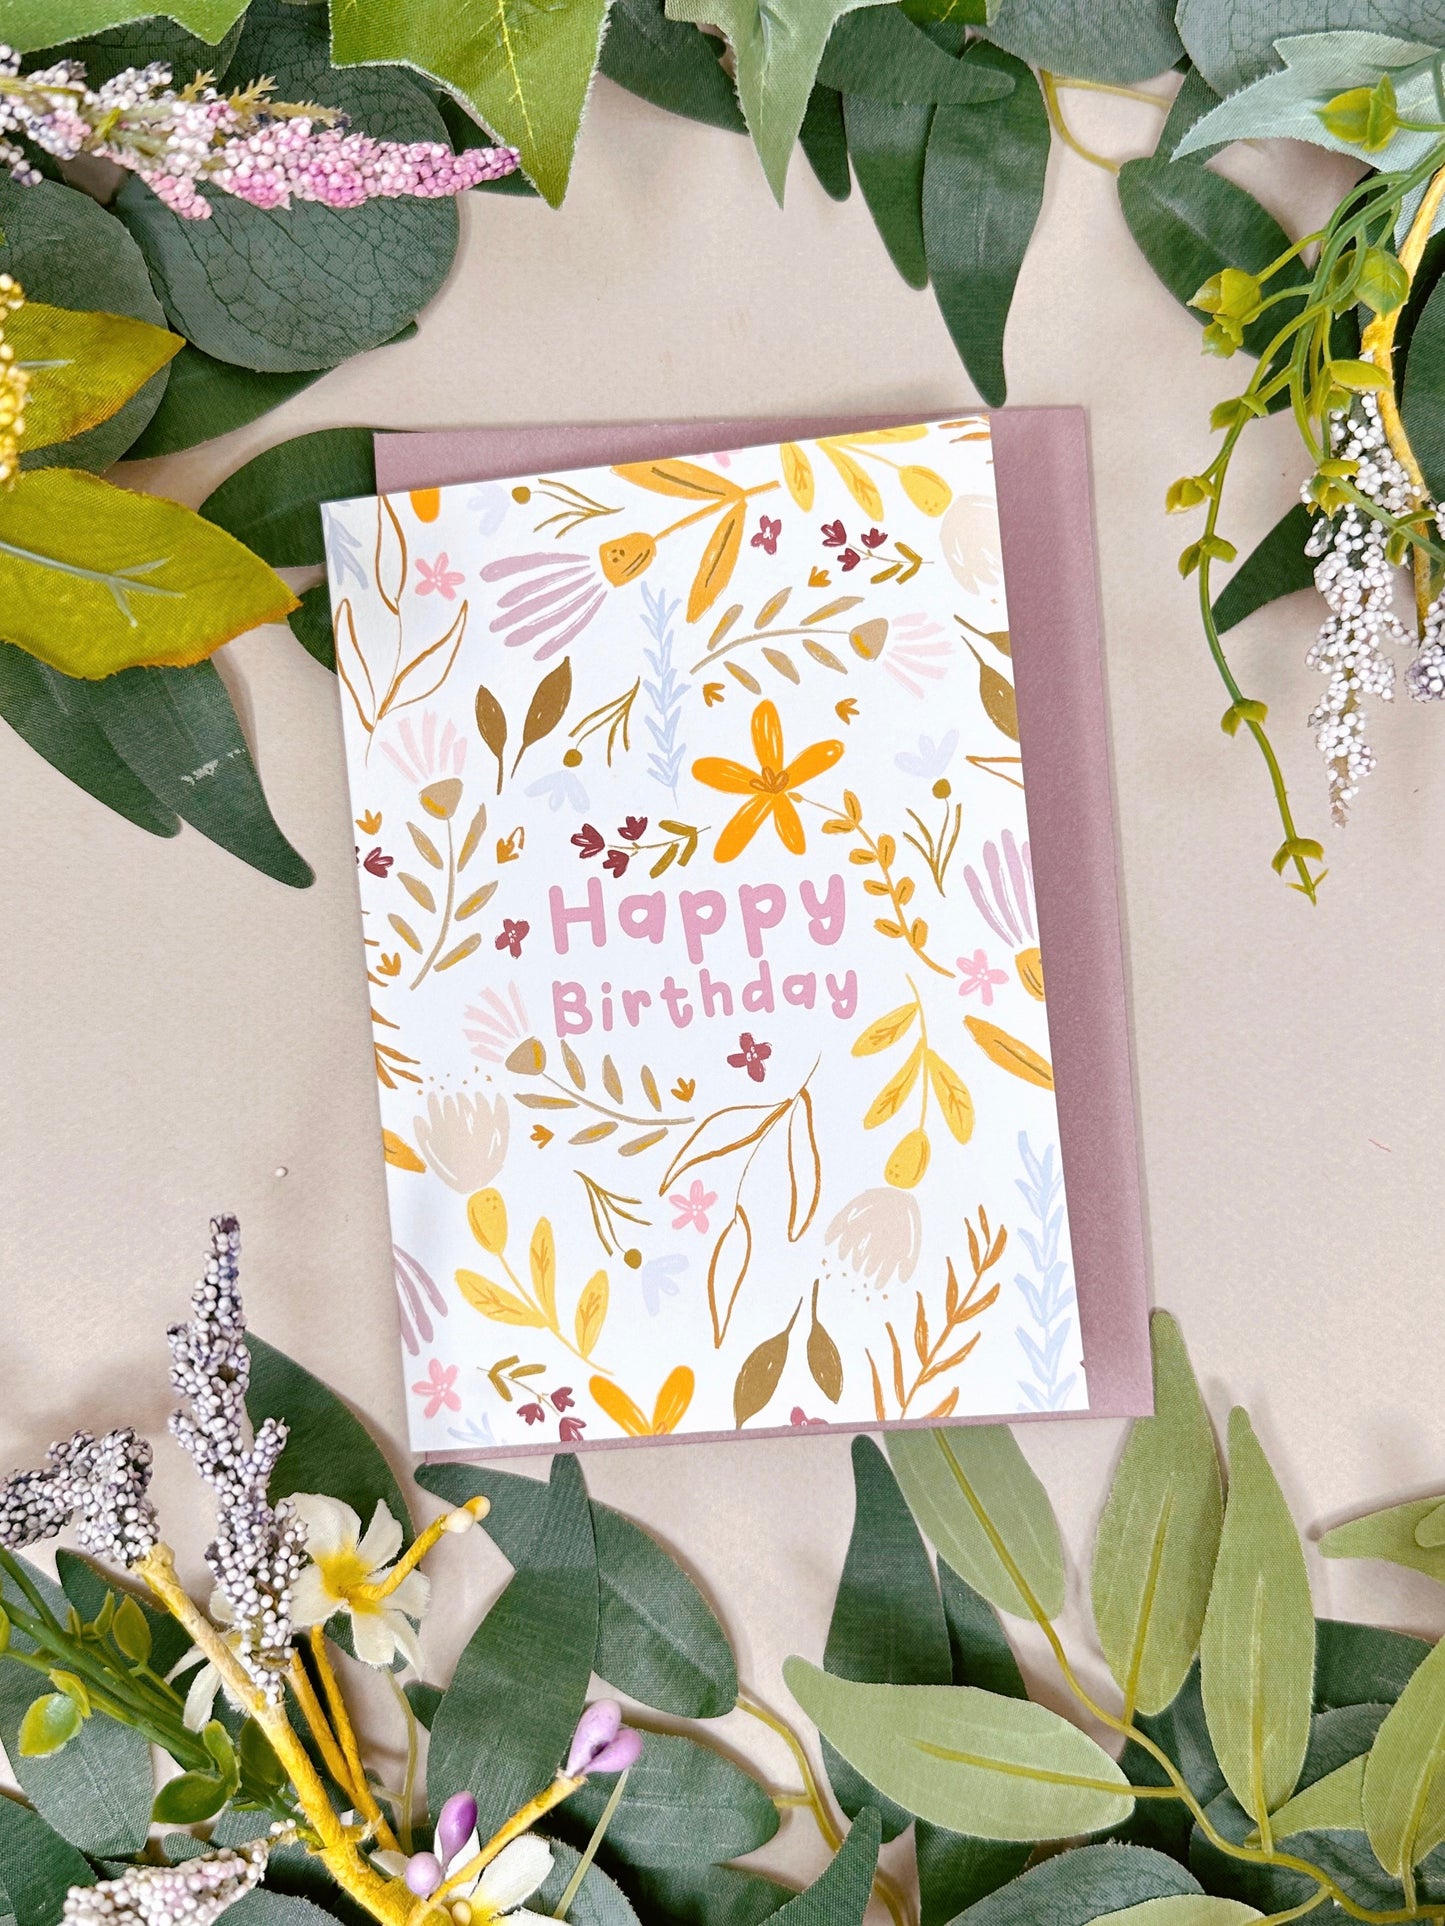 Floral Happy Birthday Card